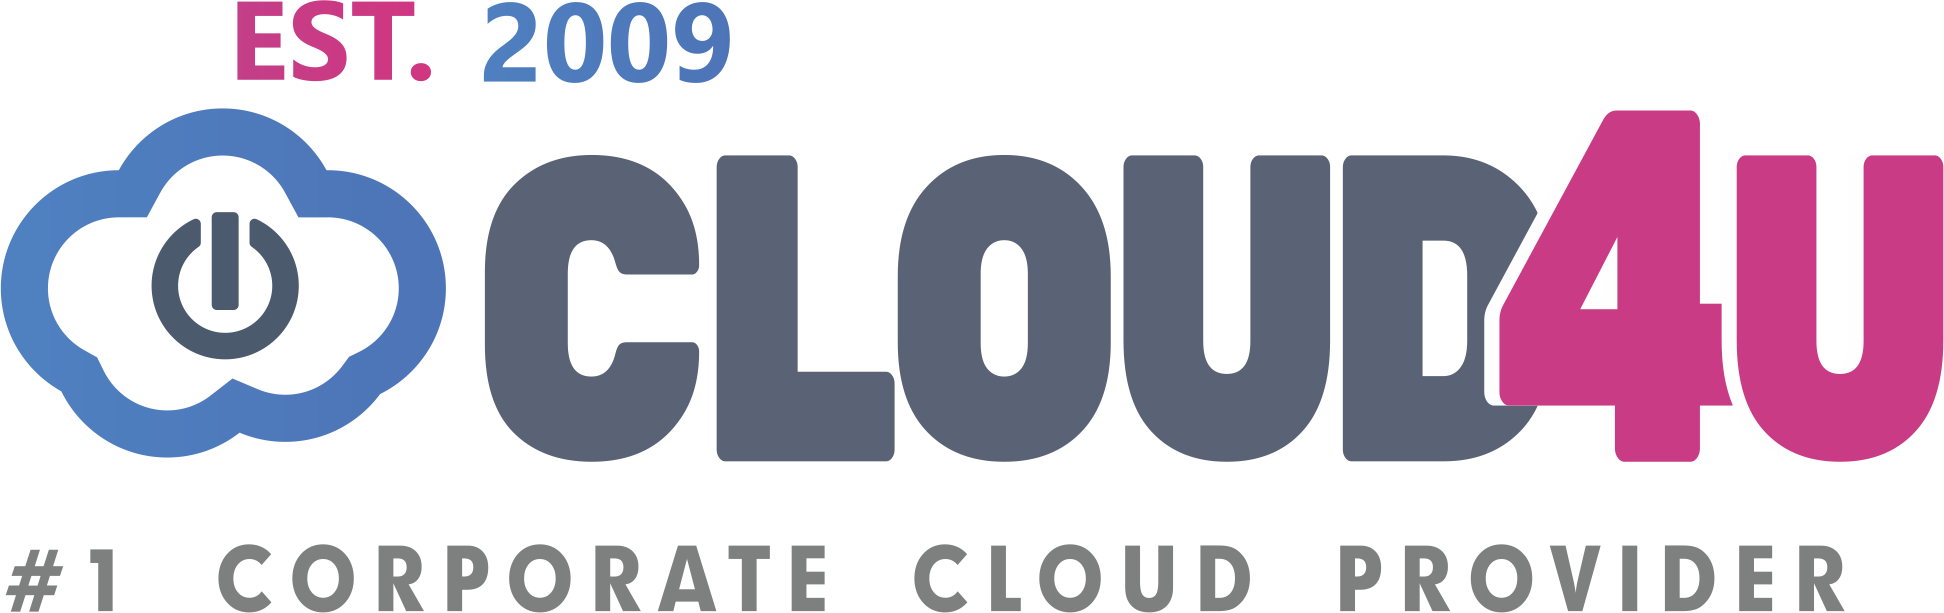 Www cloud. Cloud4y компания. Cloud4y logo. Cloud компания. Cloud компания логотип.